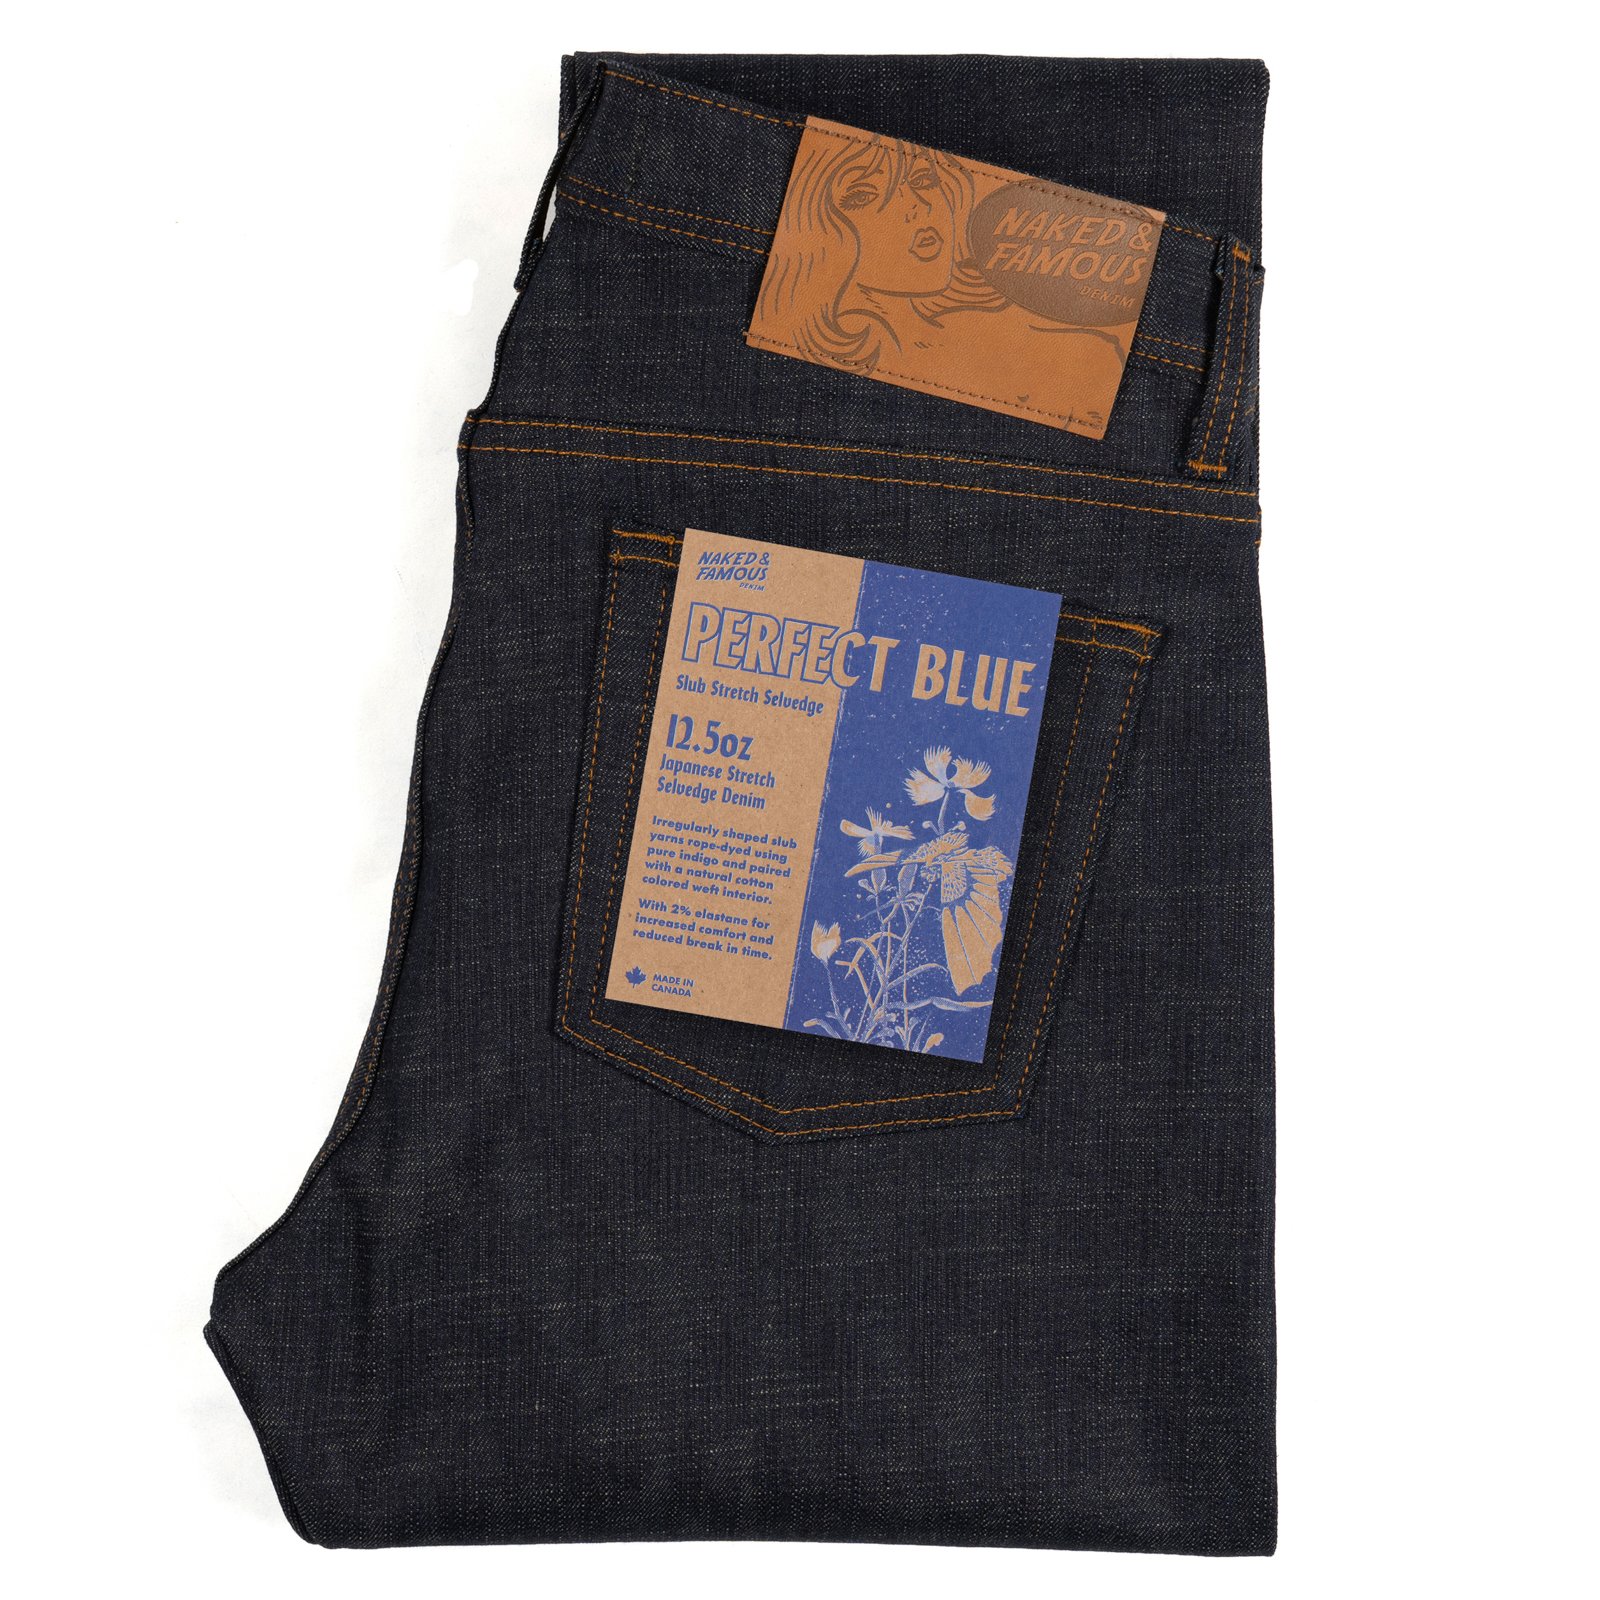  Perfect Blue Slub Selvedge jeans - folded 